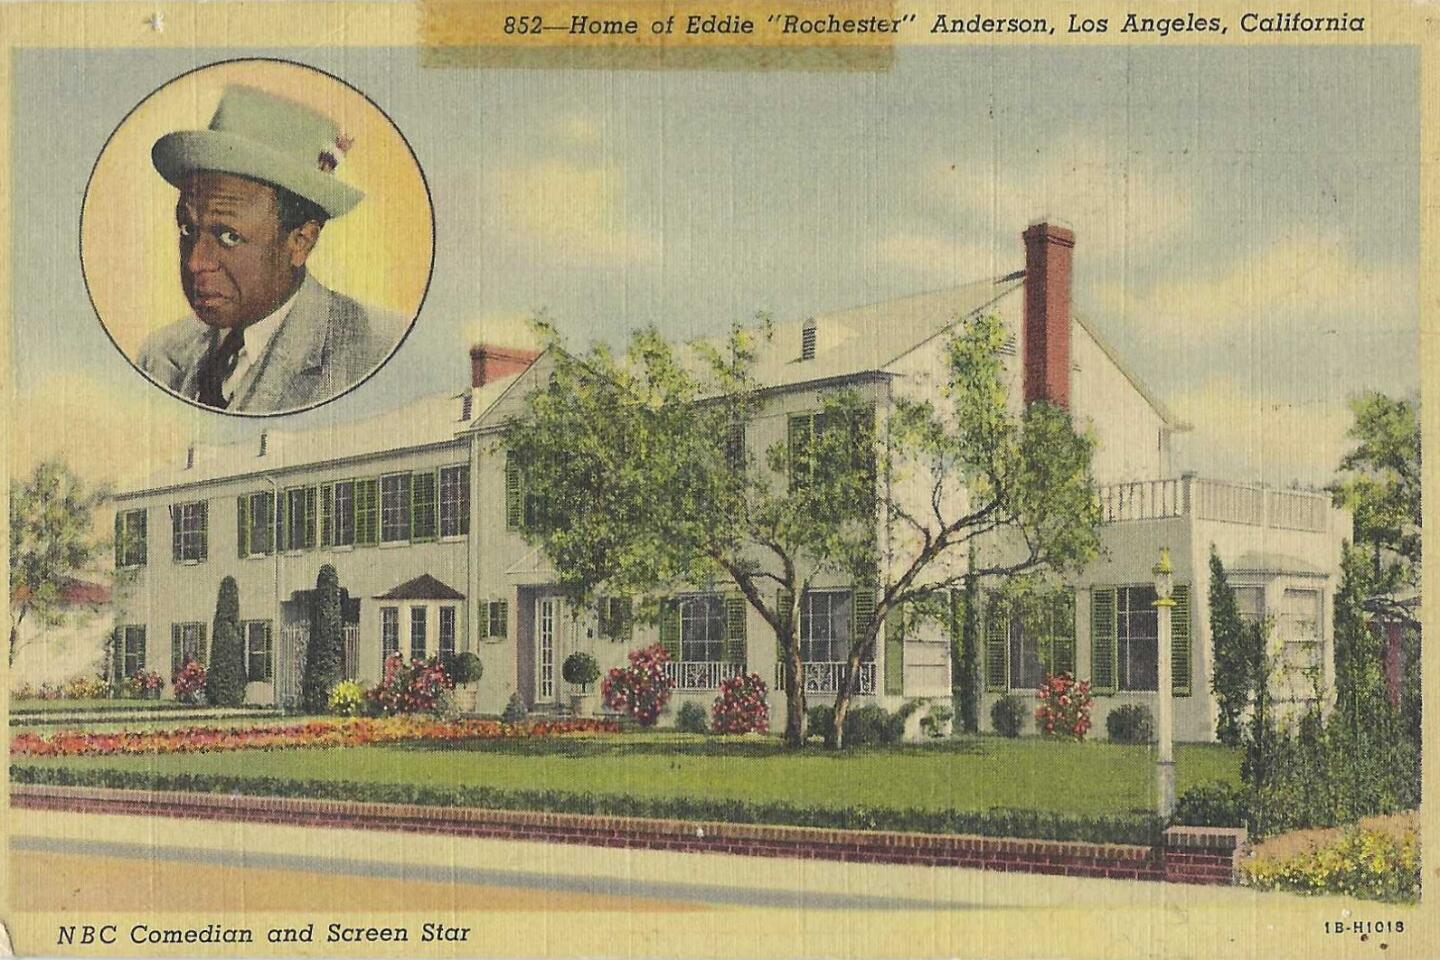 Vintage postcard: Eddie "Rochester" Anderson's home